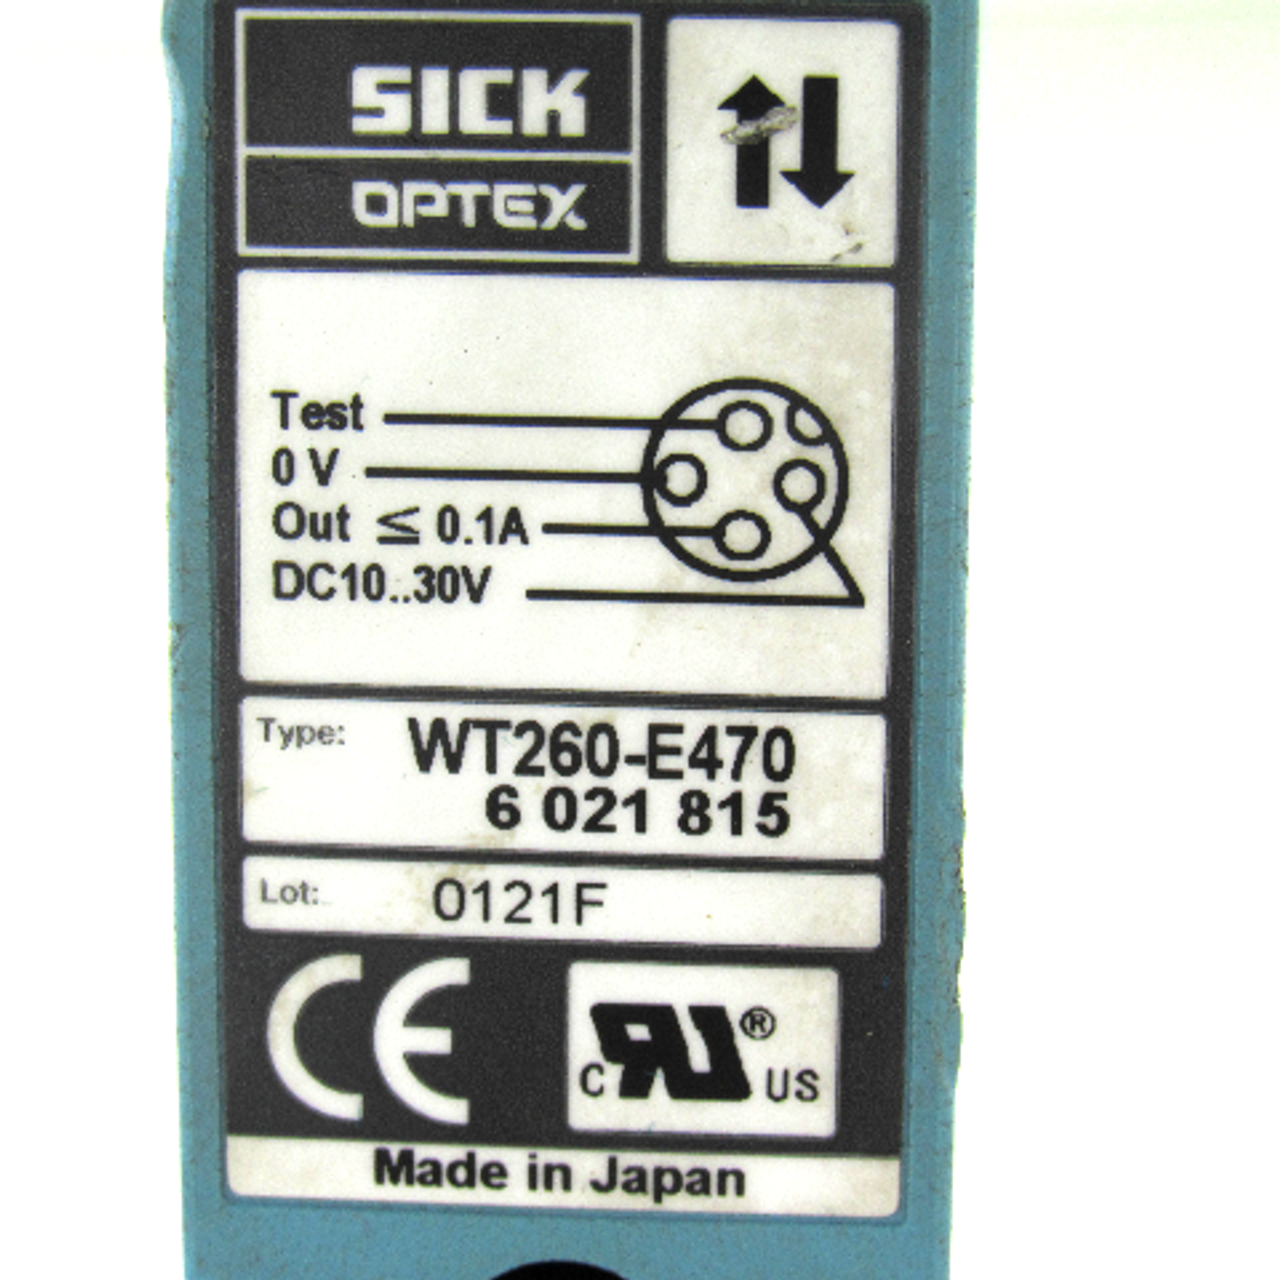 Sick WT260-E470 Optex Proximity Sensor, 1.5M Range, <0.1 Amp, 10~30V DC